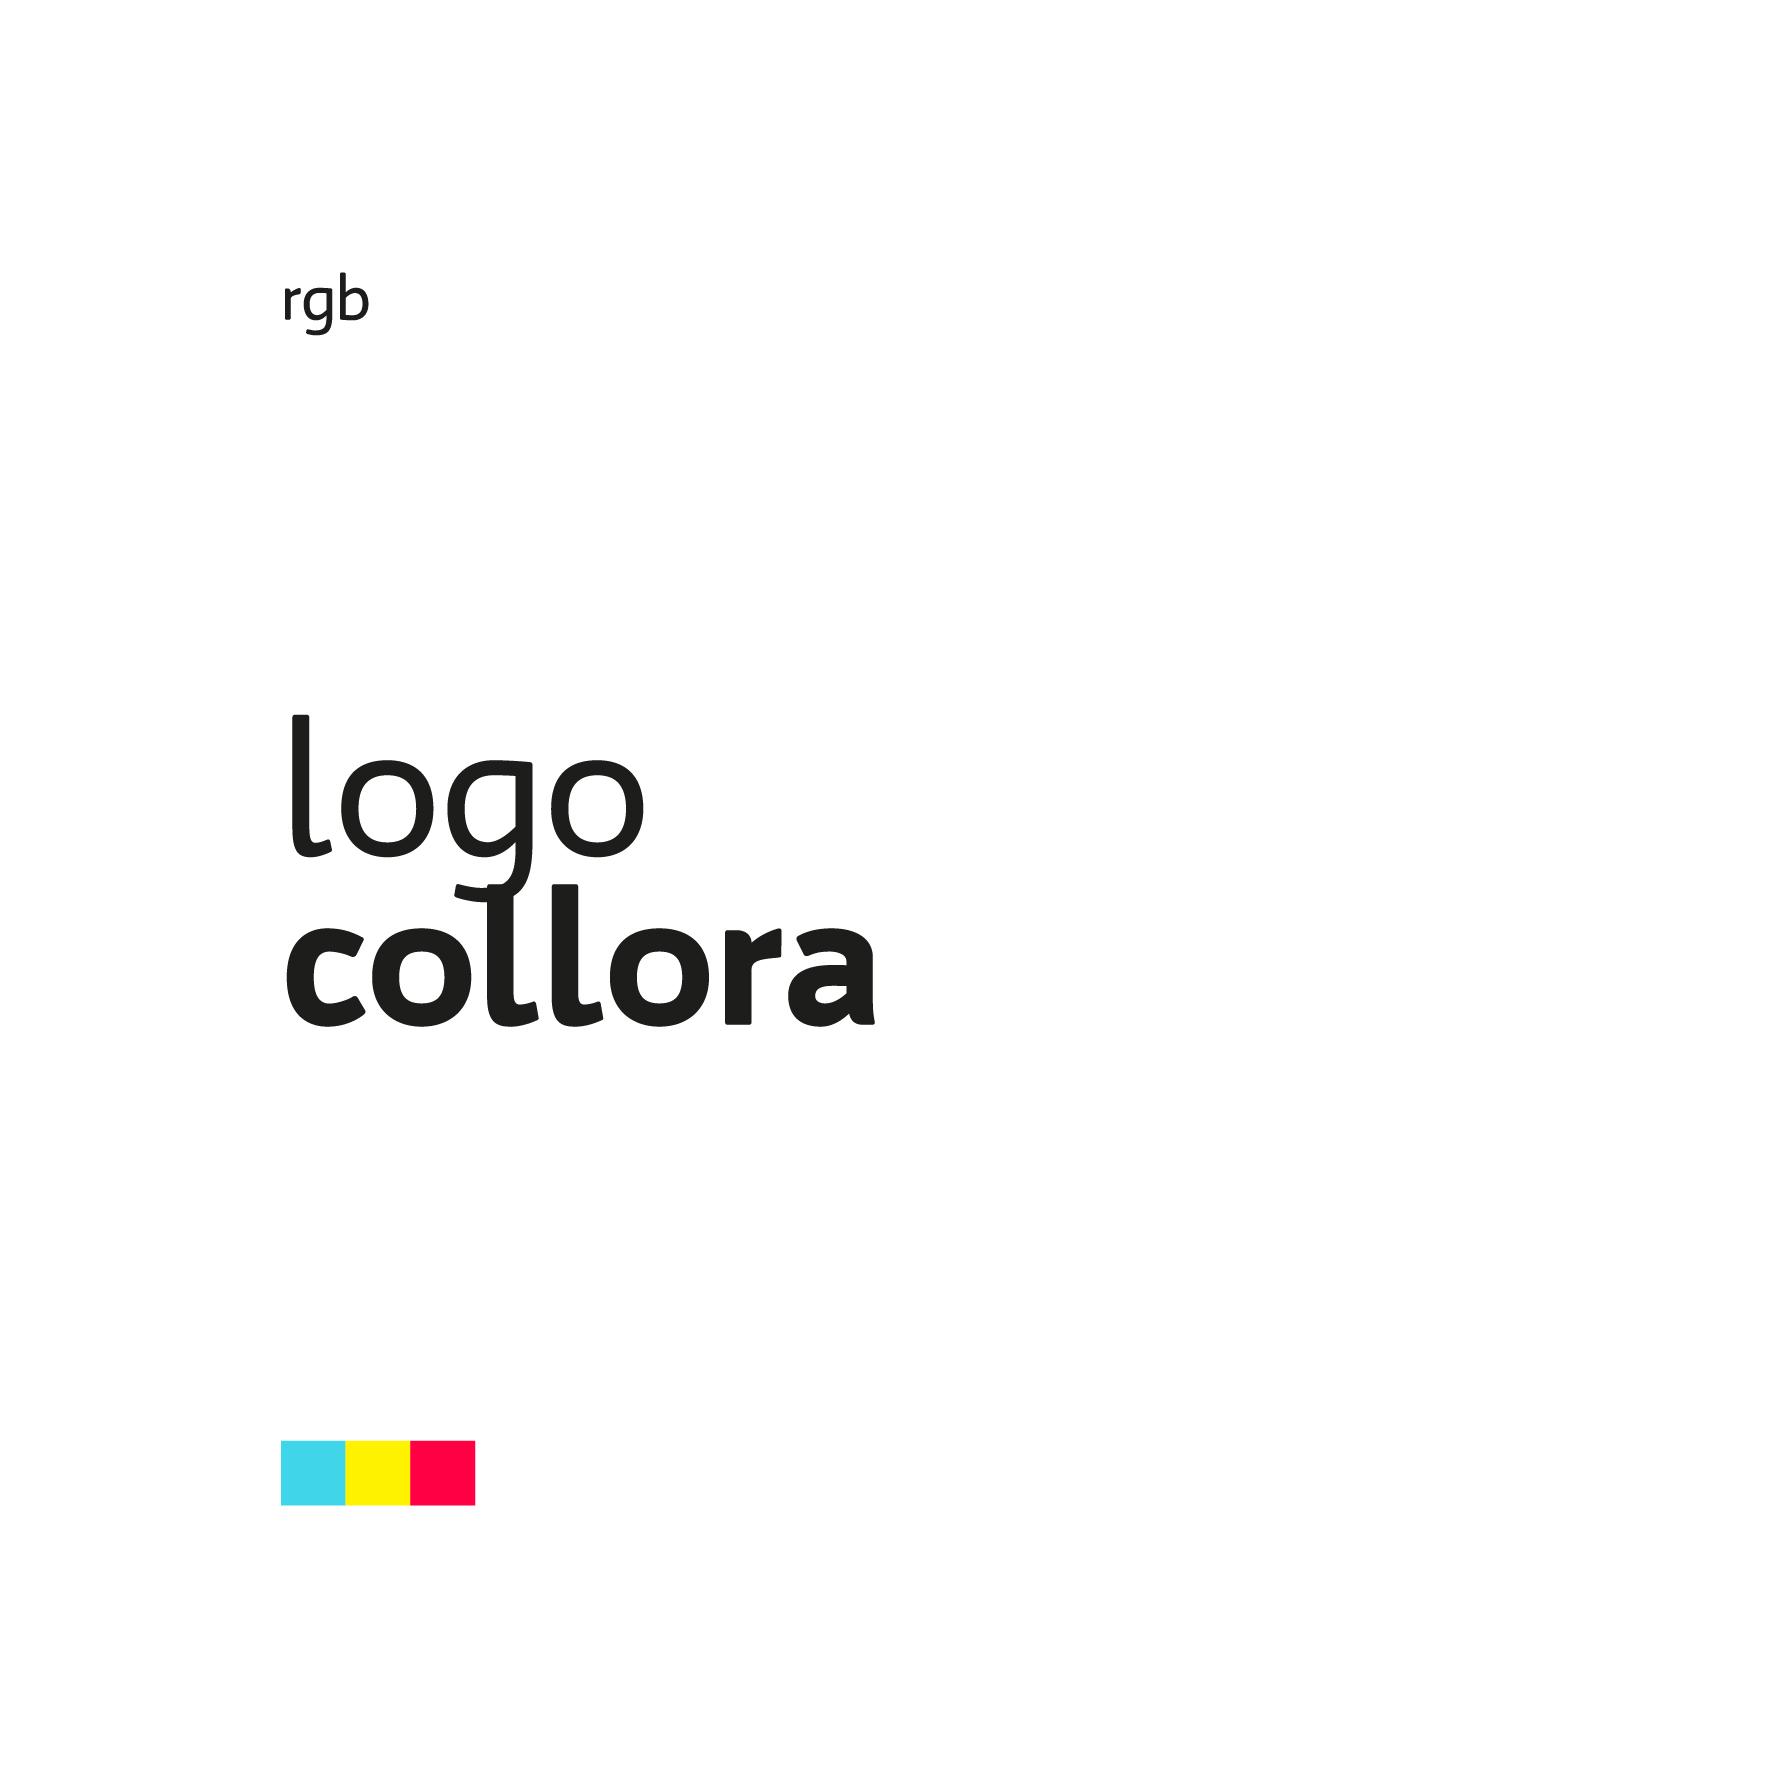 LOGO - COLLORA (RGB)